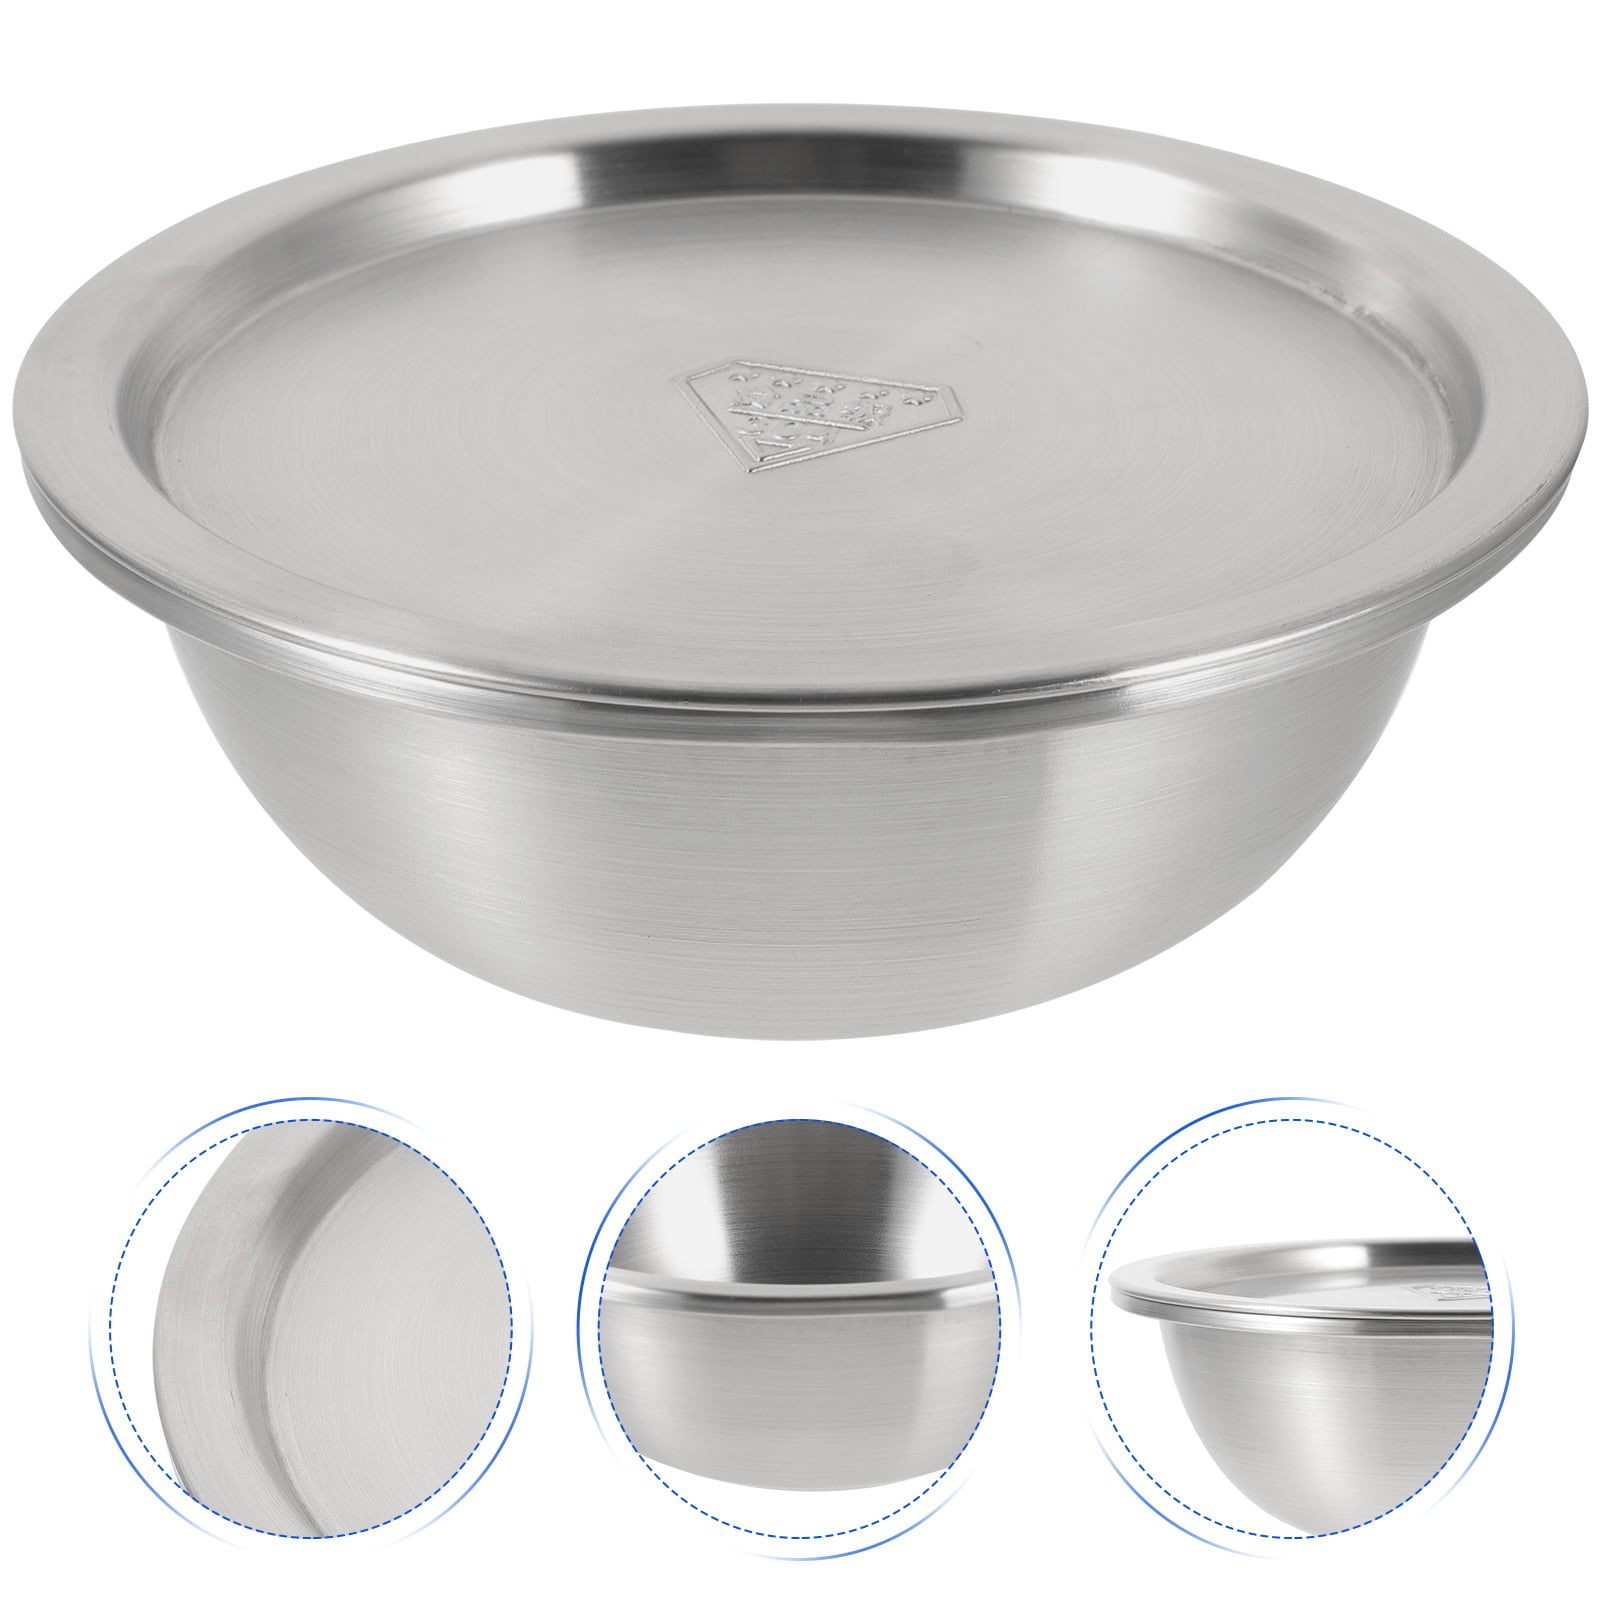 Met Lux 6 qt Stainless Steel Premium German Mixing Bowl - 1 Count Box, Size: 5.6 qt